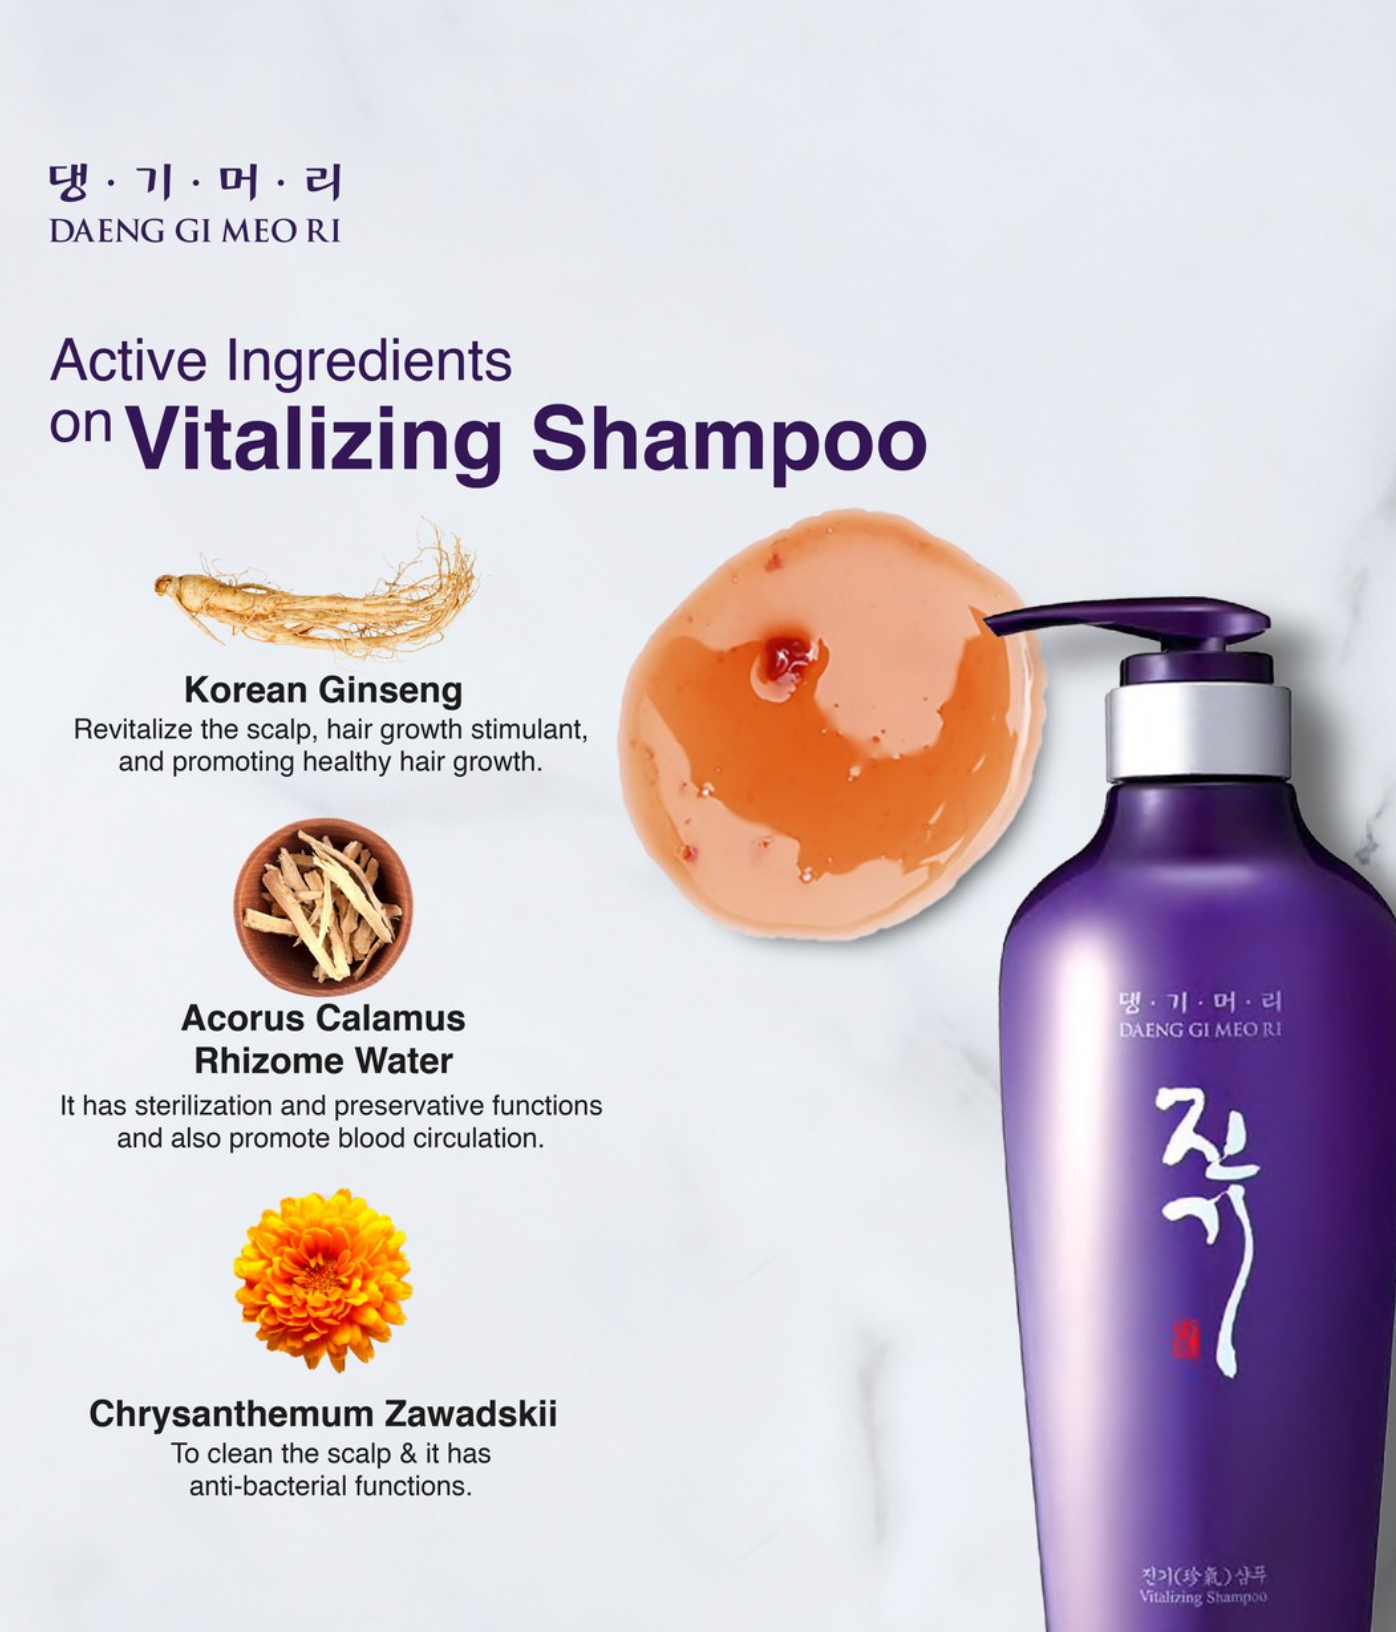 Vitalizing Shampoo